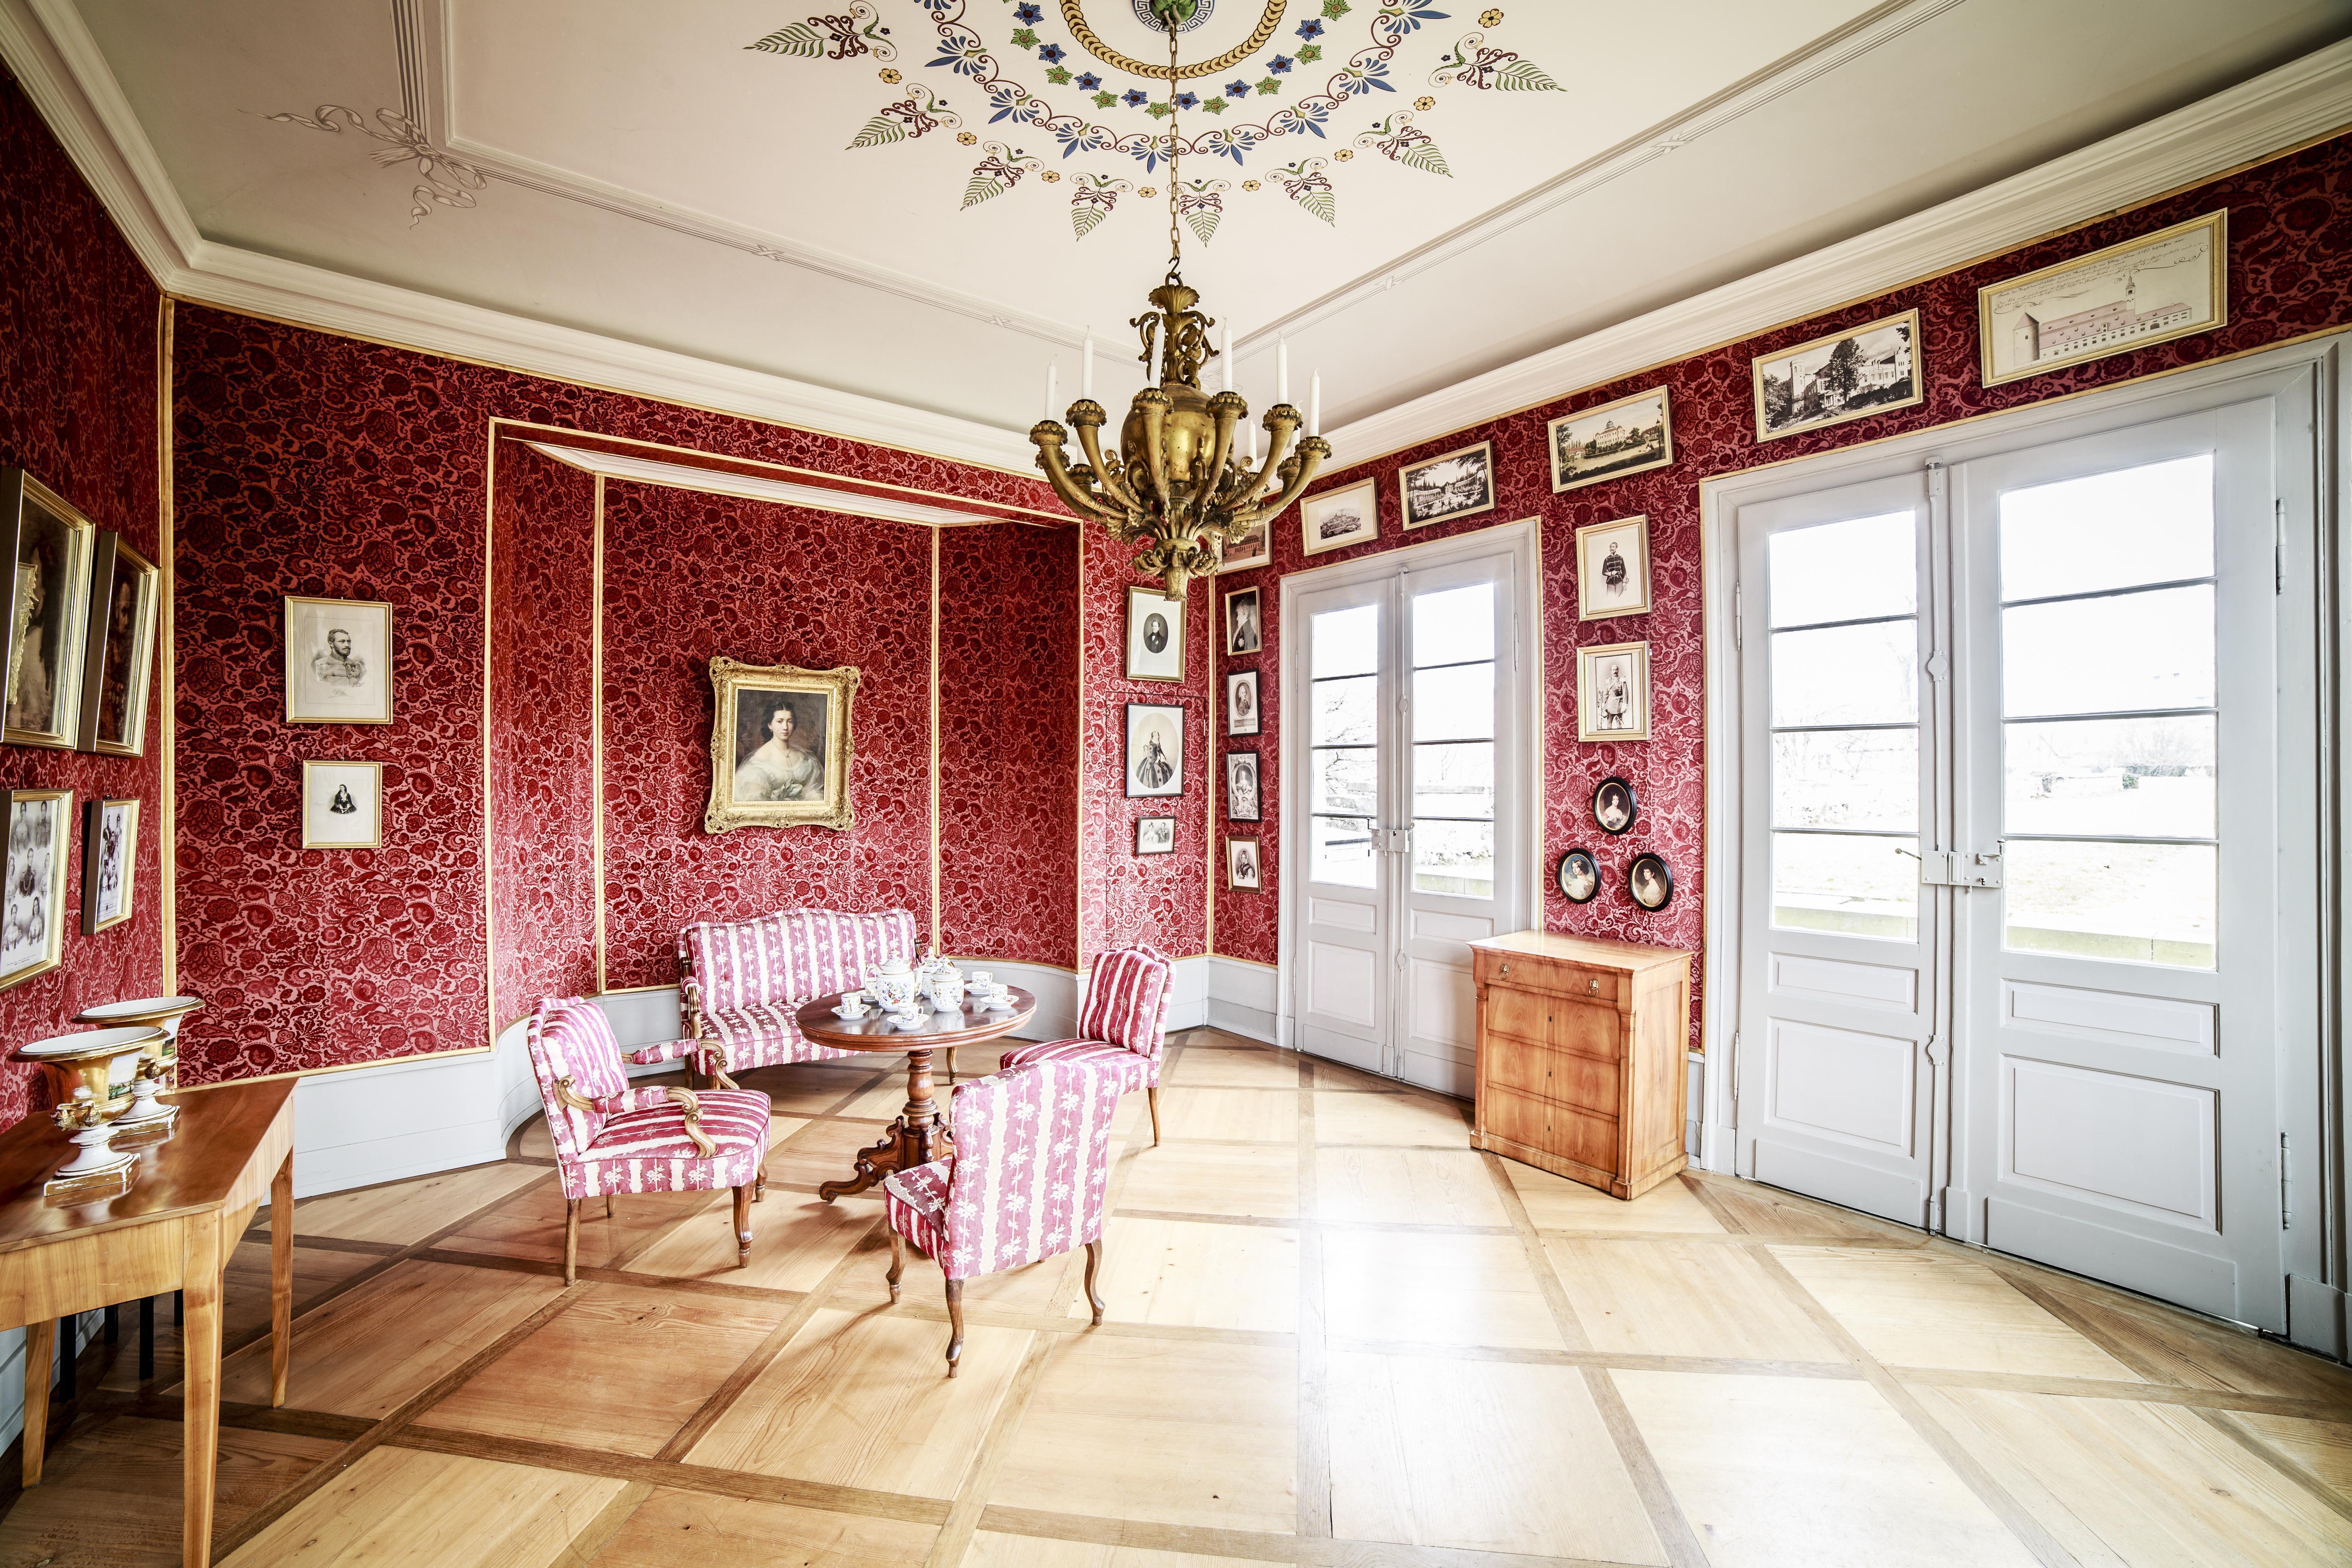 Red salon at Kirchheim Palace, furnishings from Duchess Henriette's period, museum arrangement